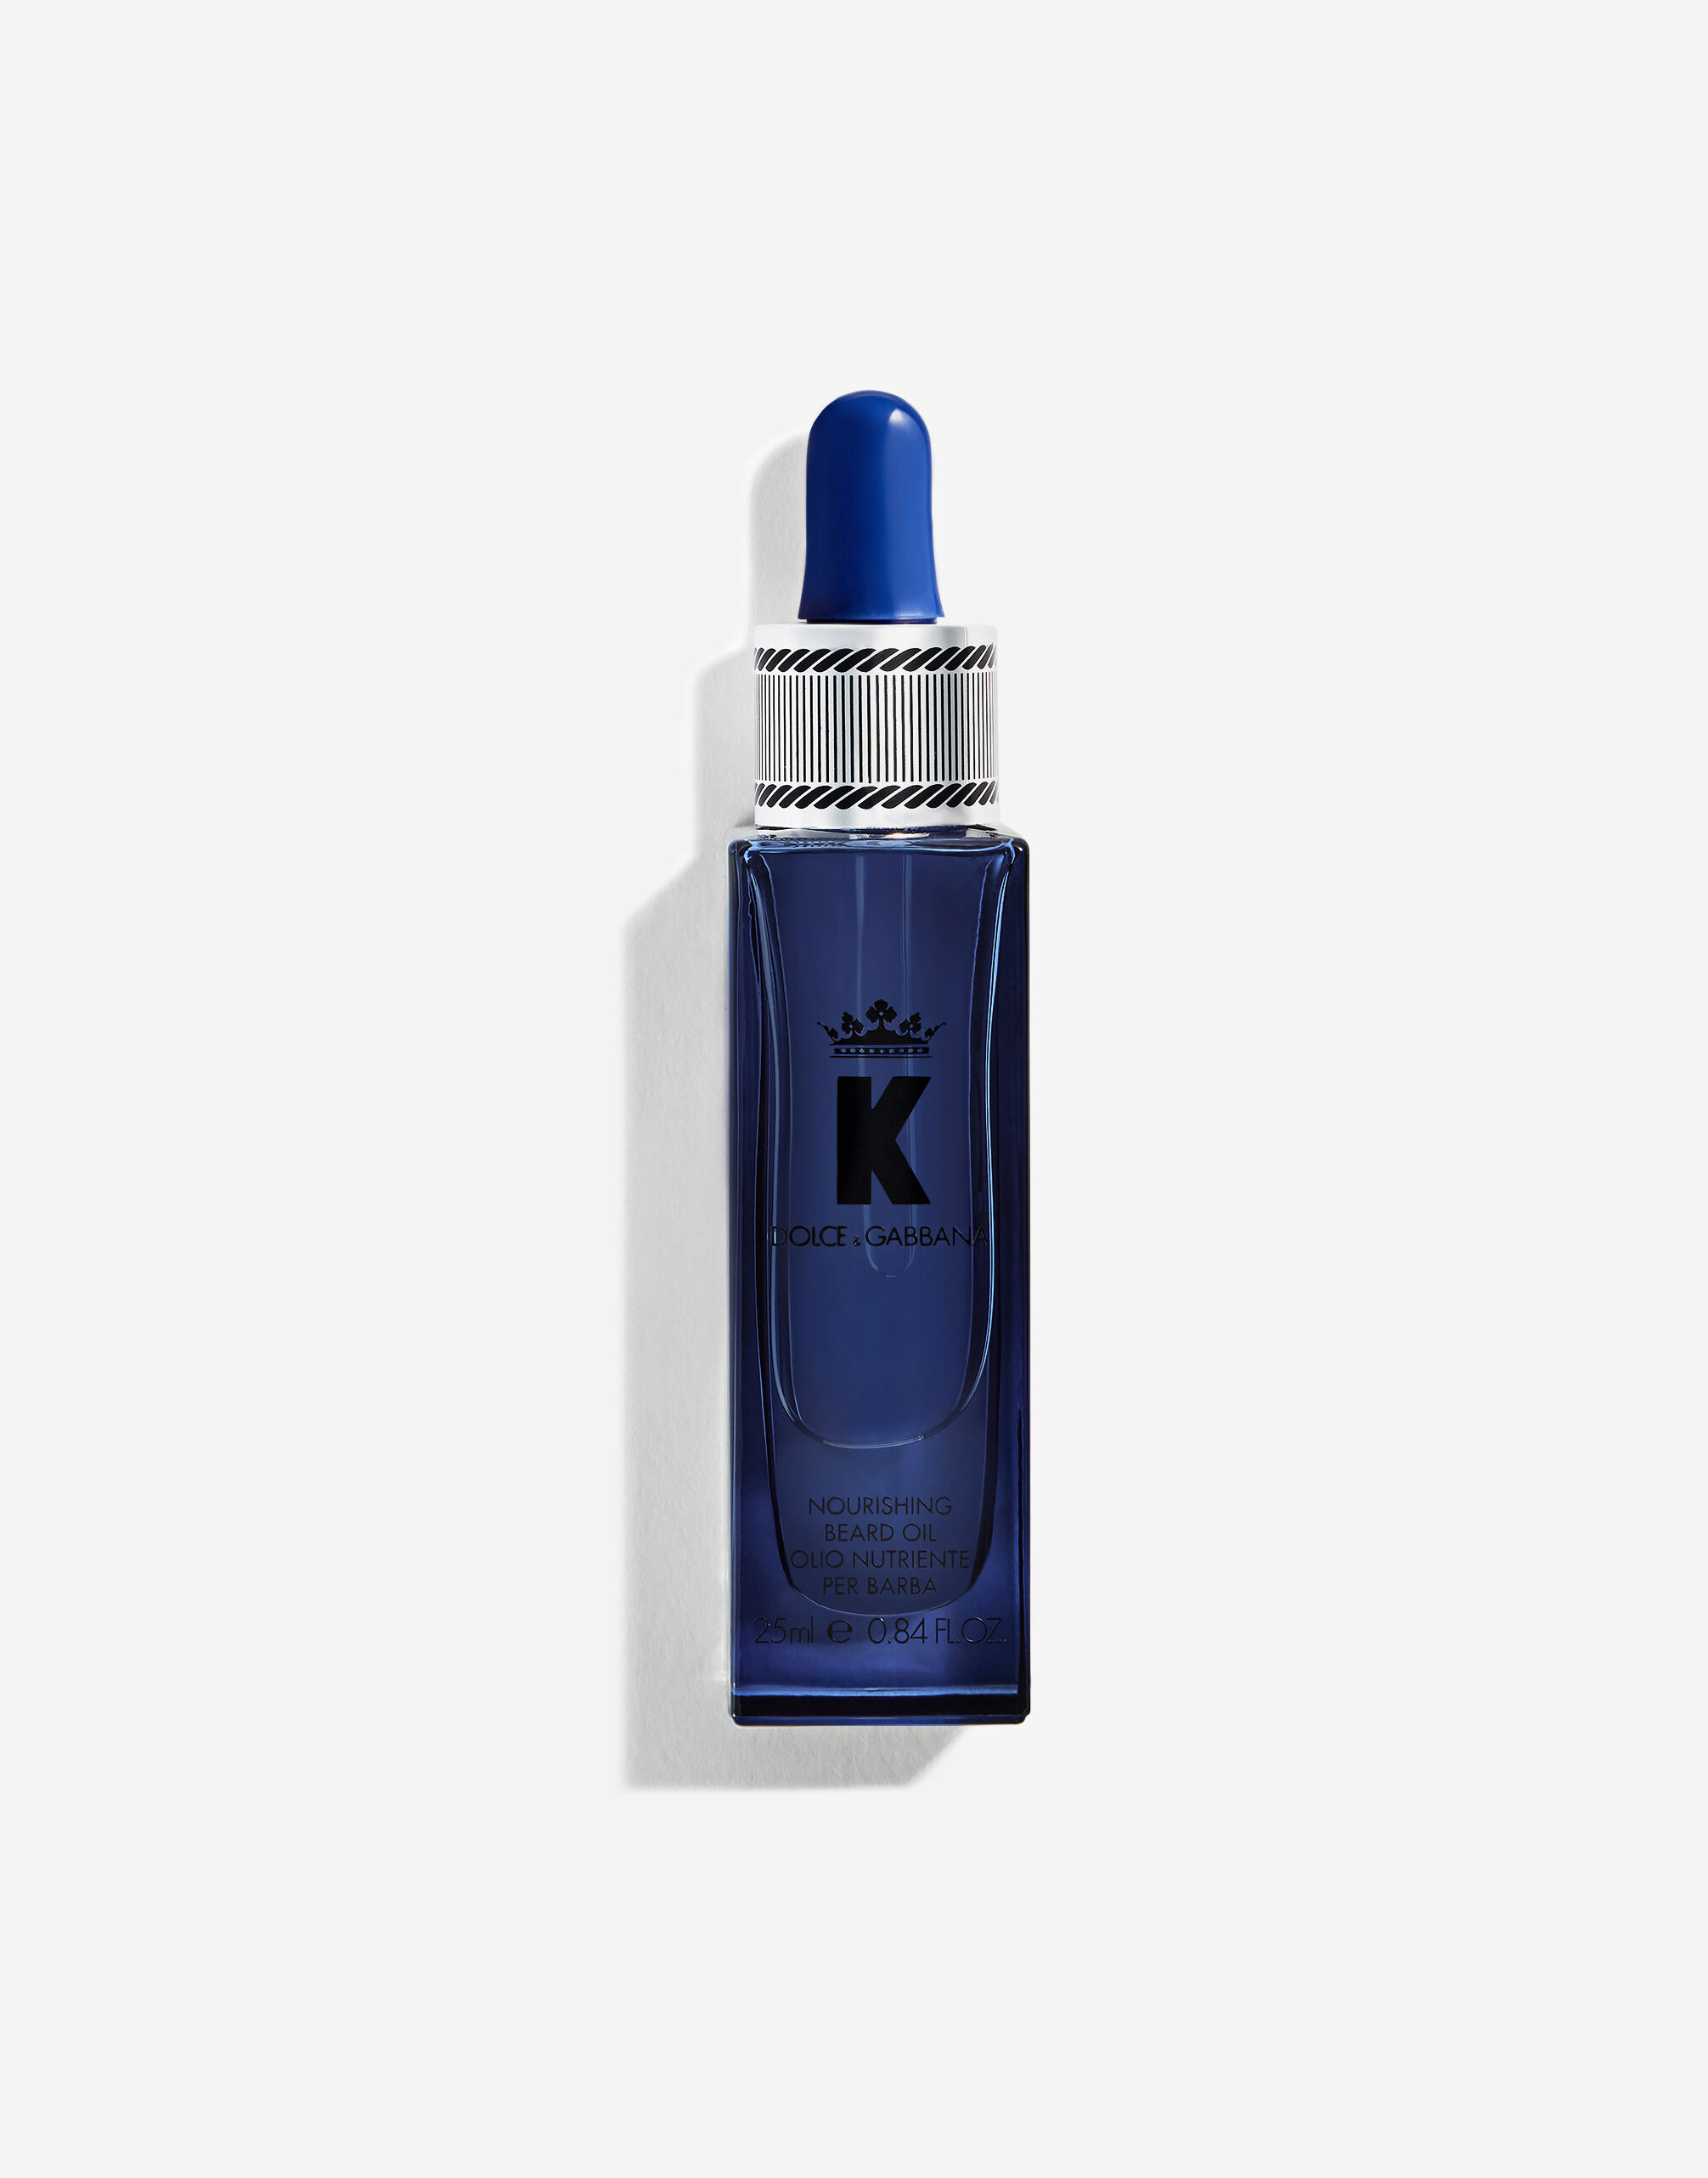 ${brand} K by Dolce&Gabbana Eau de Parfum Beard Oil ${colorDescription} ${masterID}